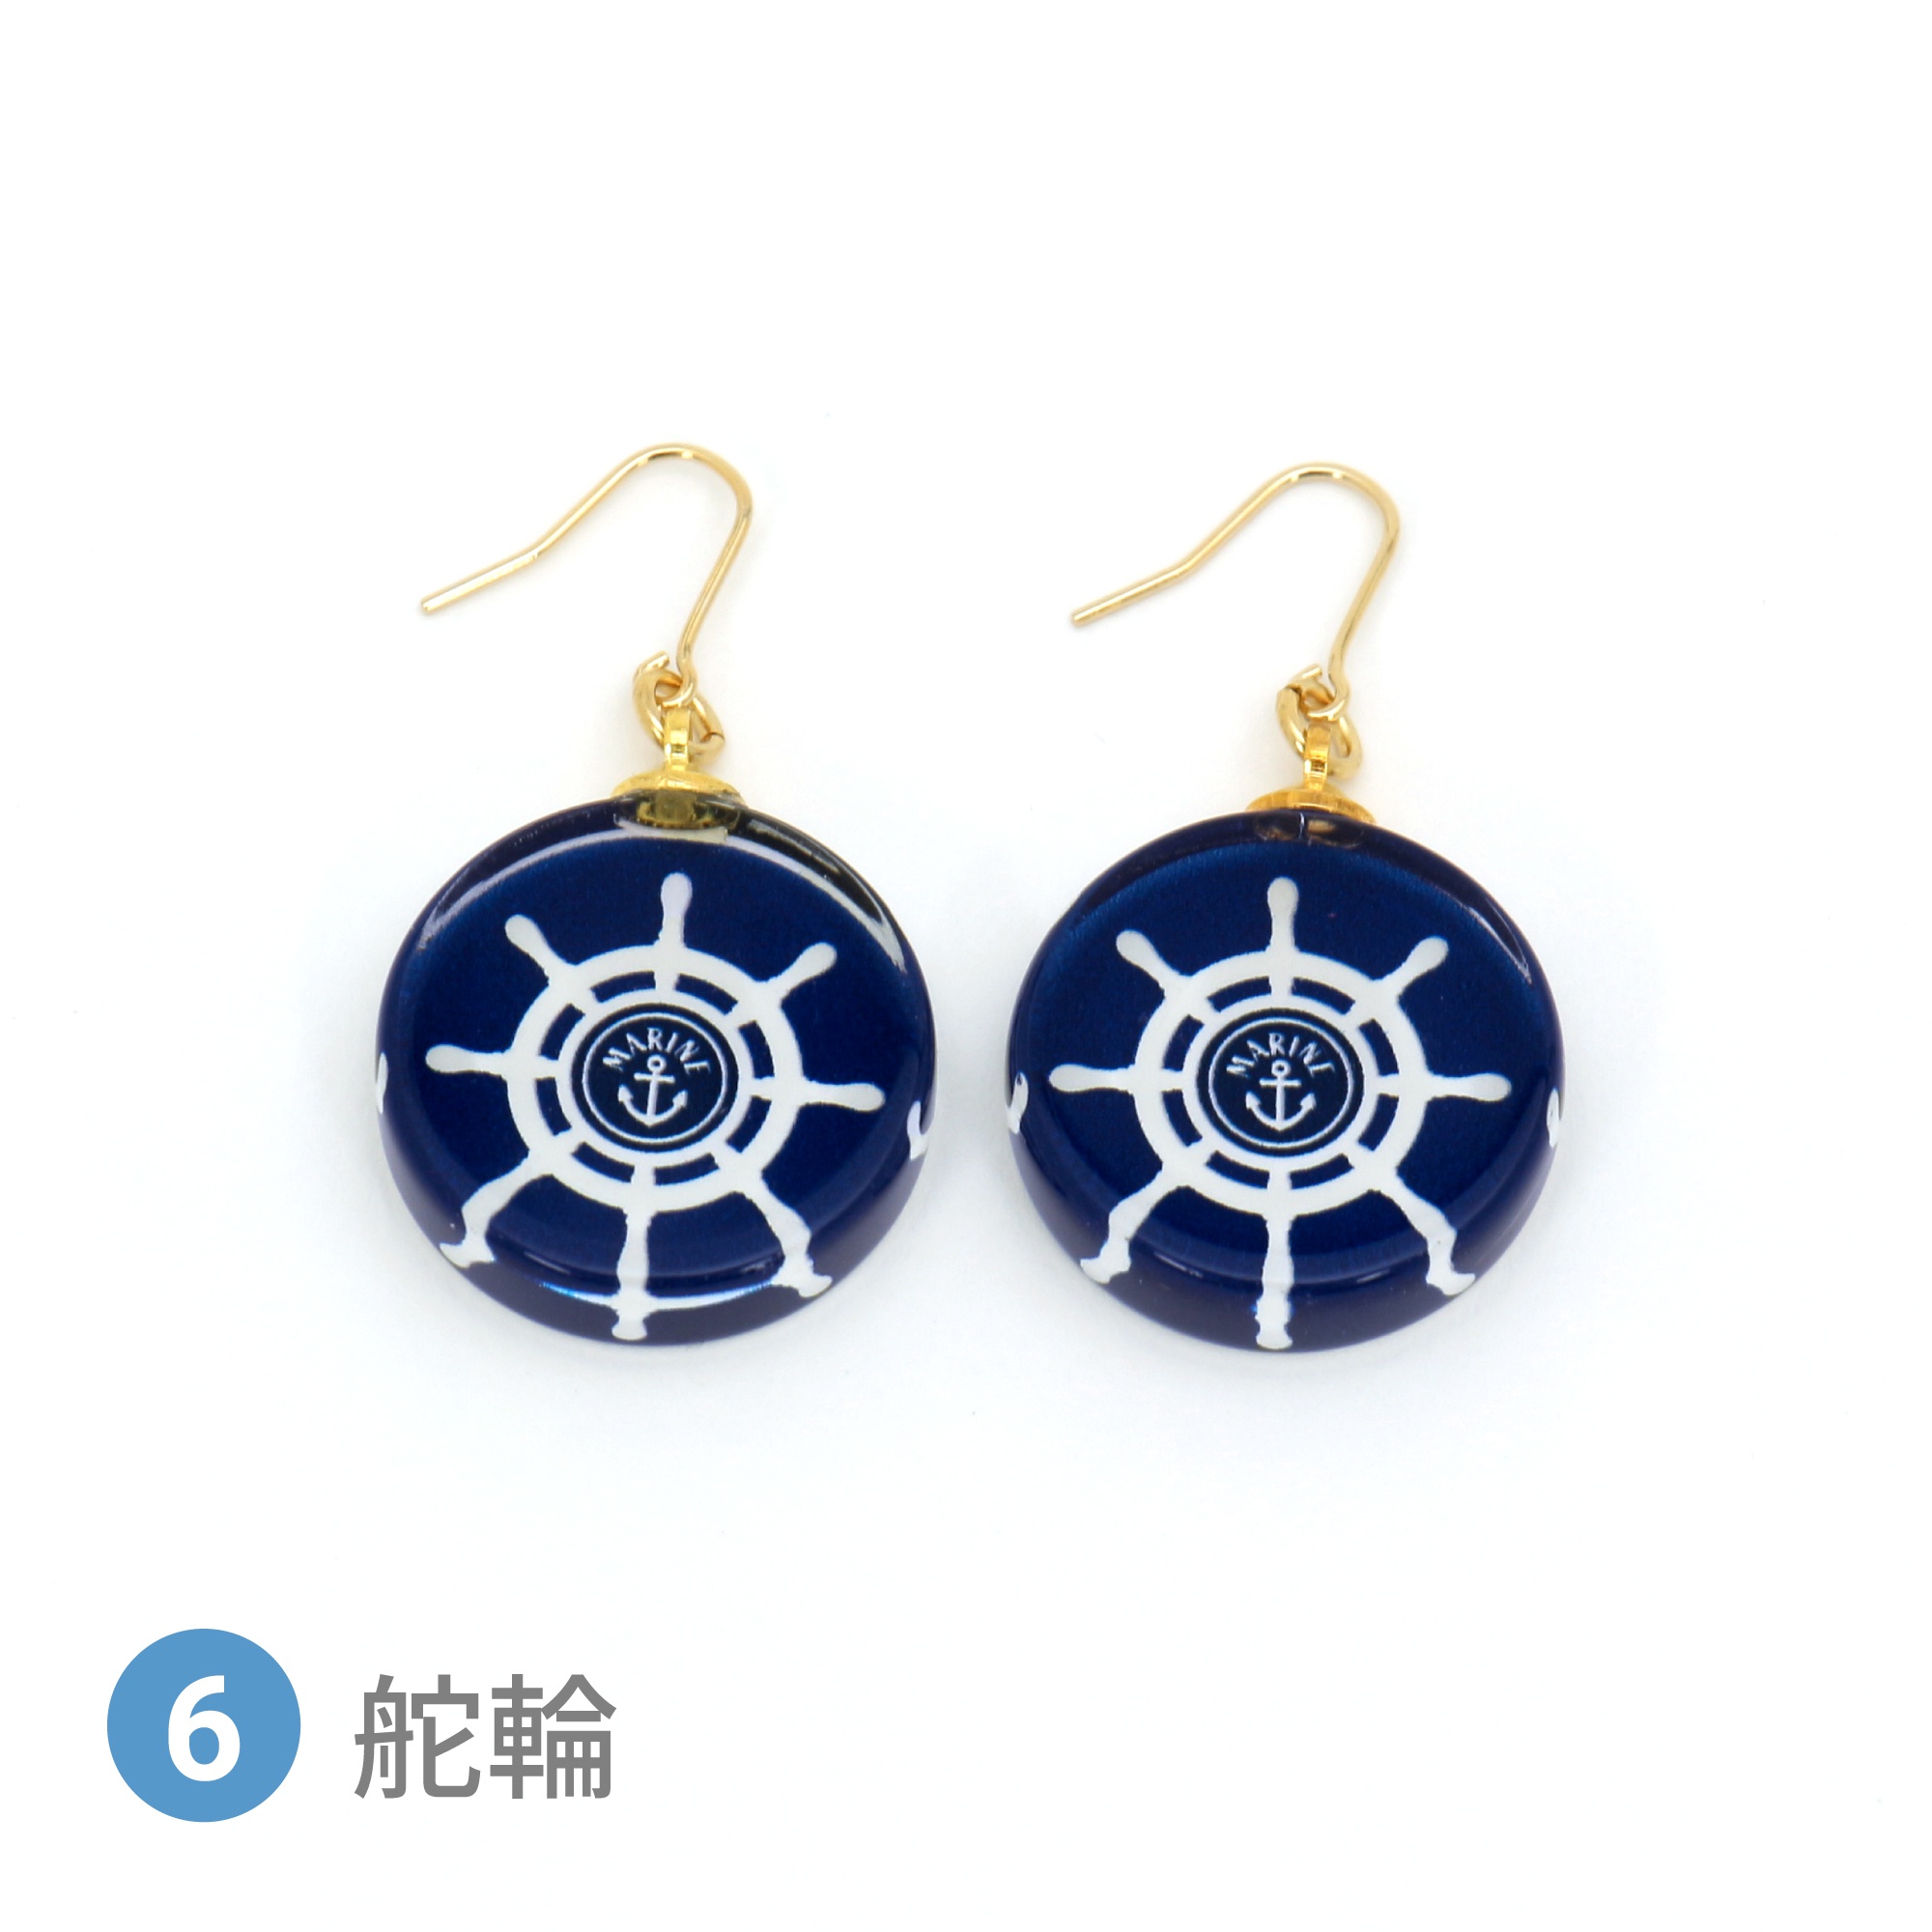 Glass accessories Pierced Earring MARINE rudder wheel round shape